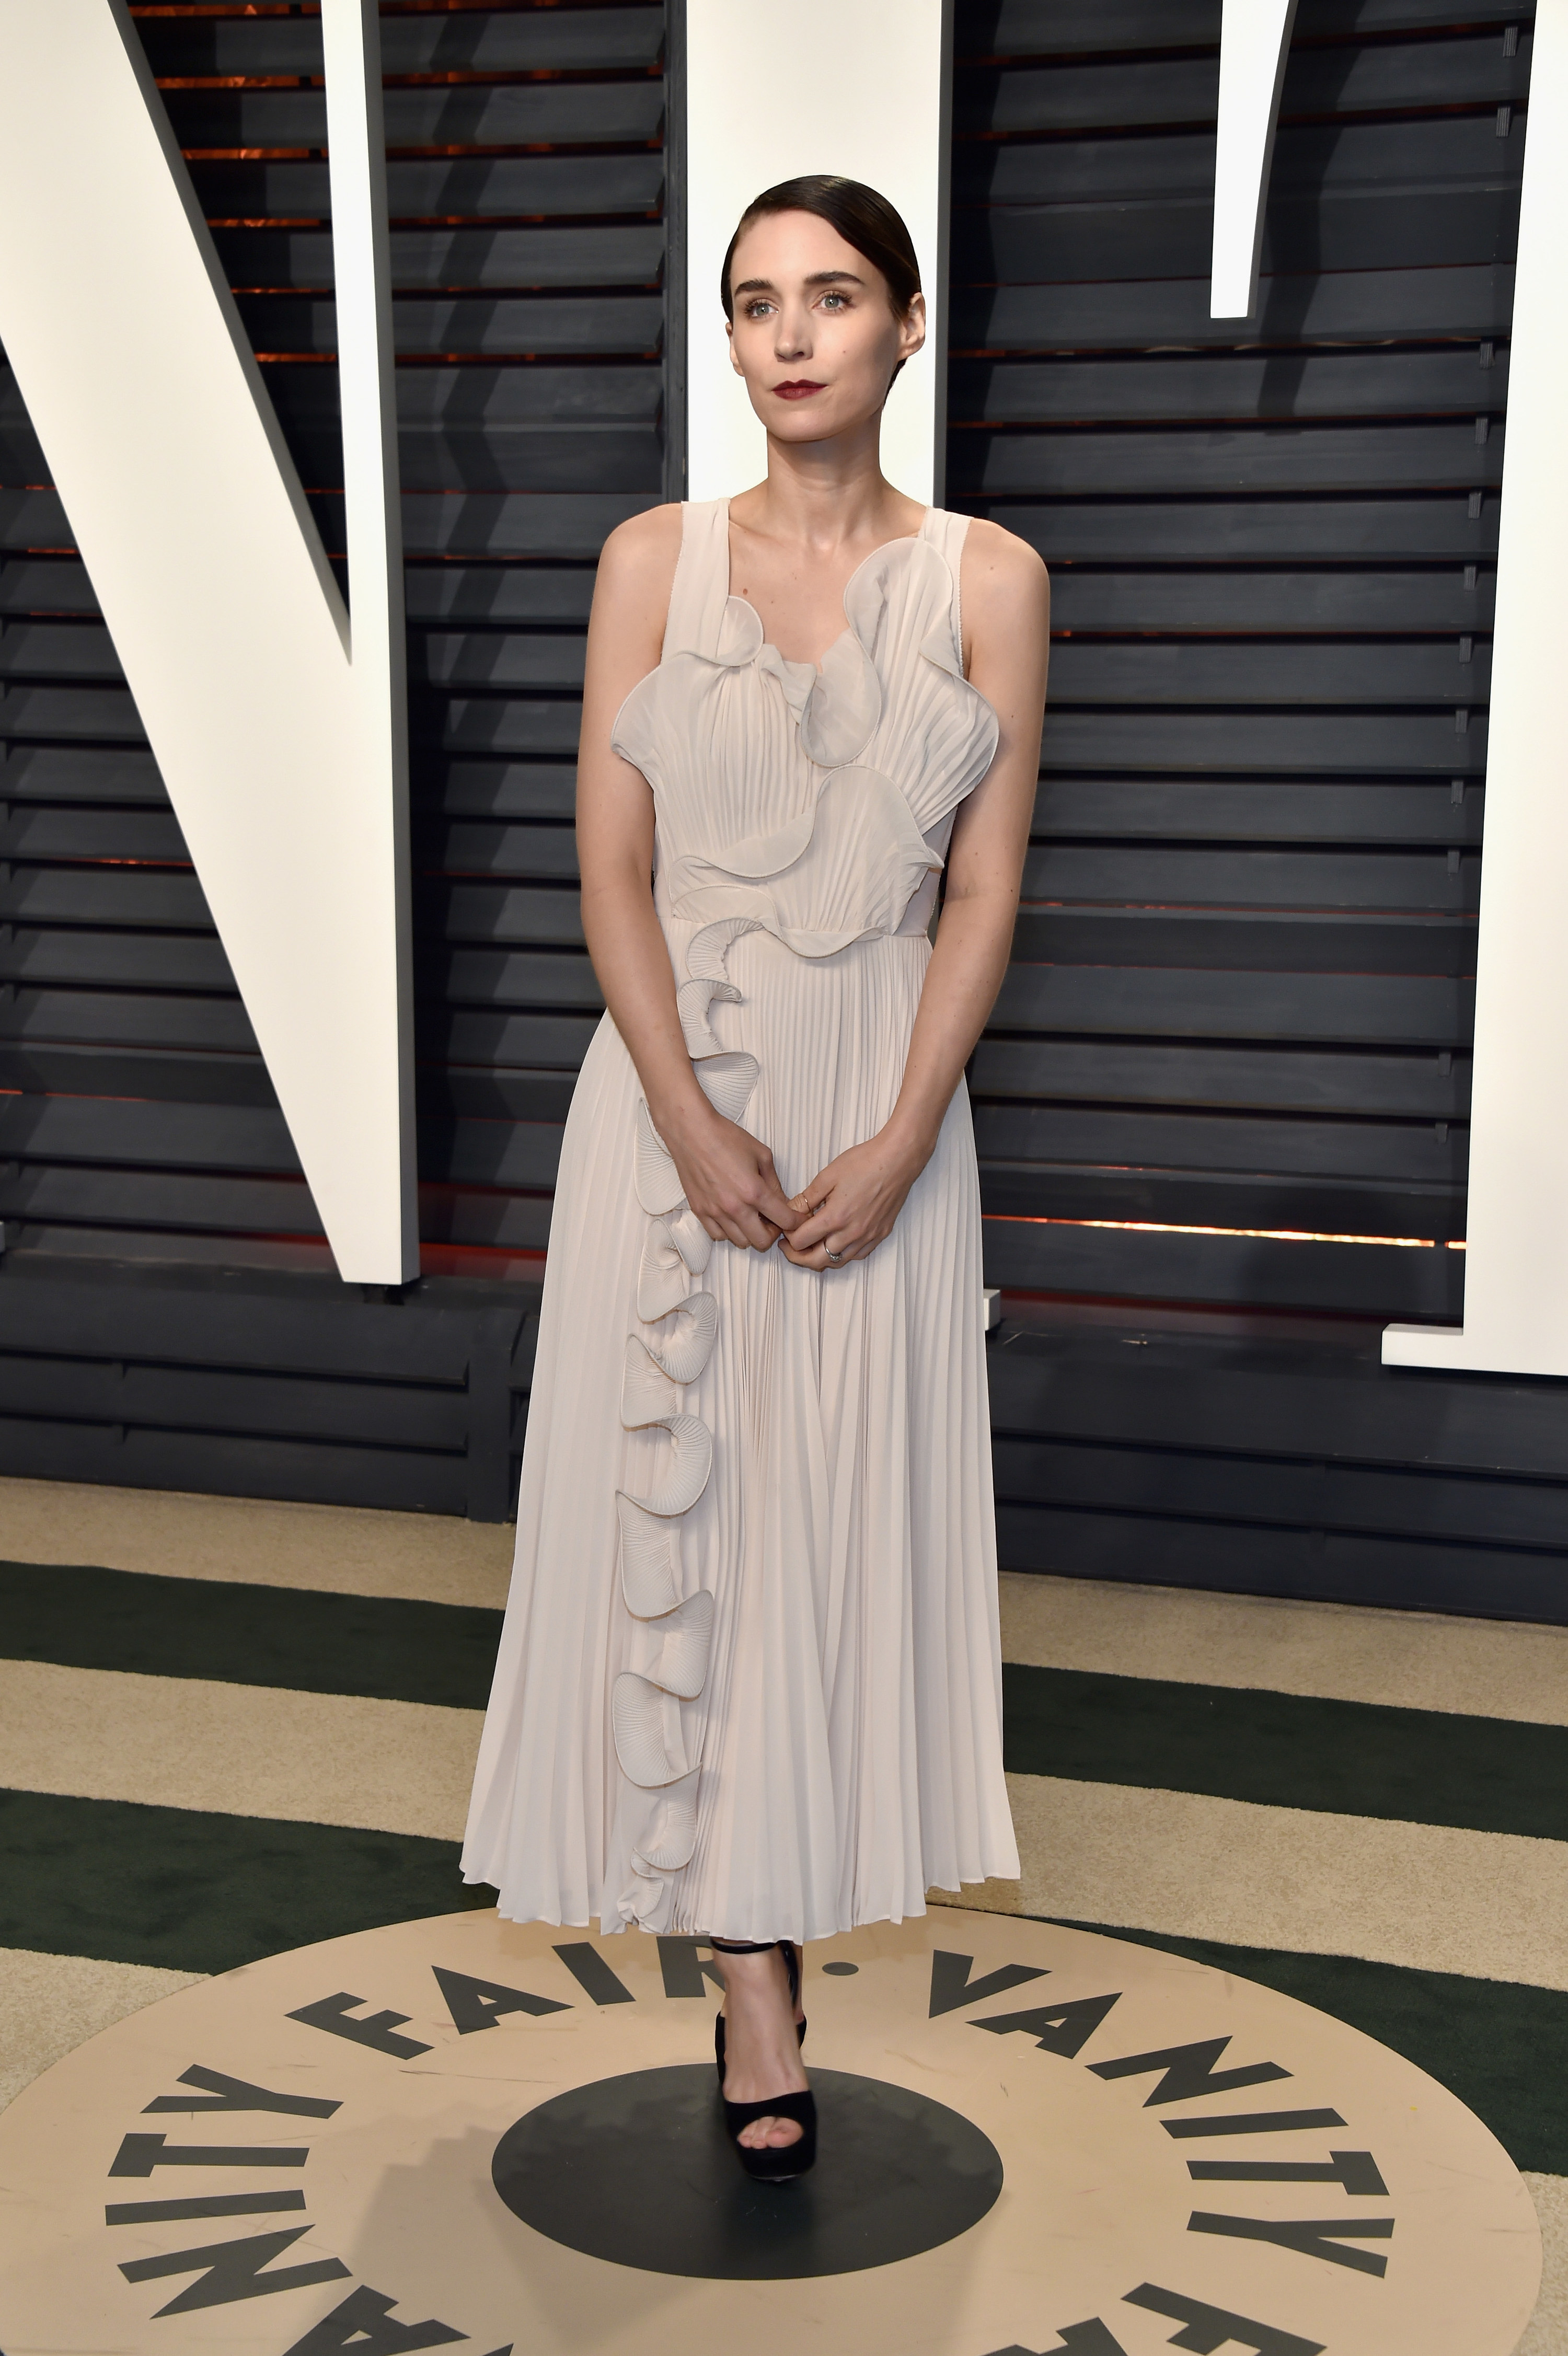 Rooney Mara at the 2017 Vanity Fair Oscar party